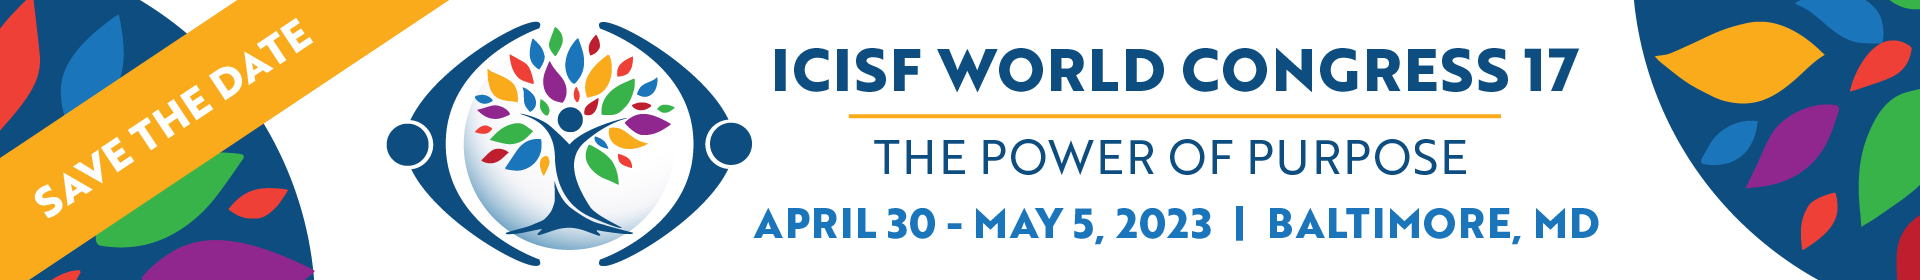 ICISF World Congress 17 Event Banner